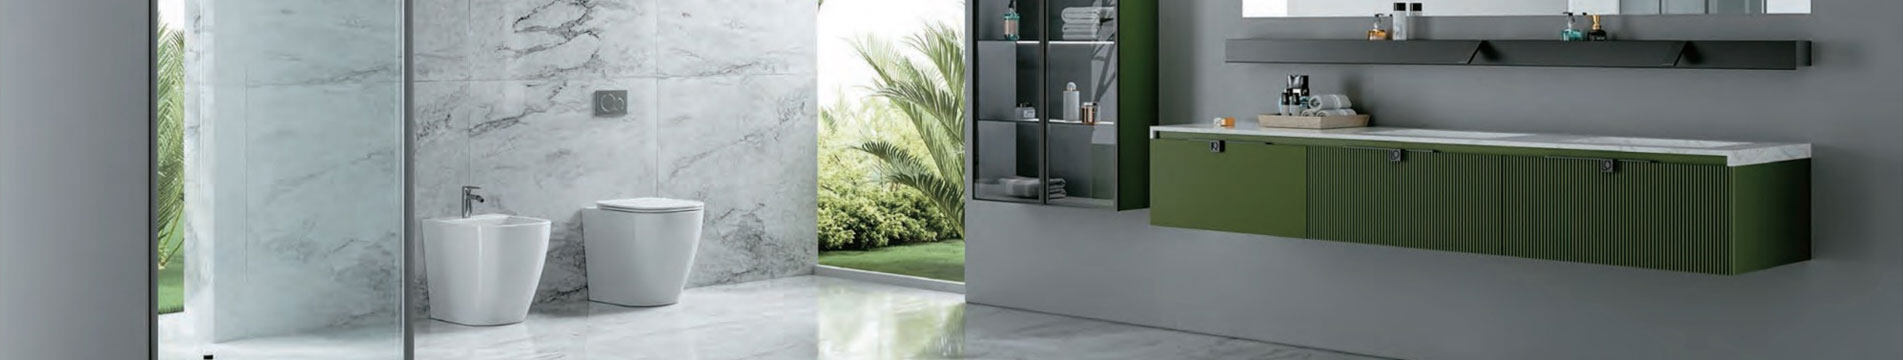 manufactured home shower faucet,bathroom cabinet manufacturer